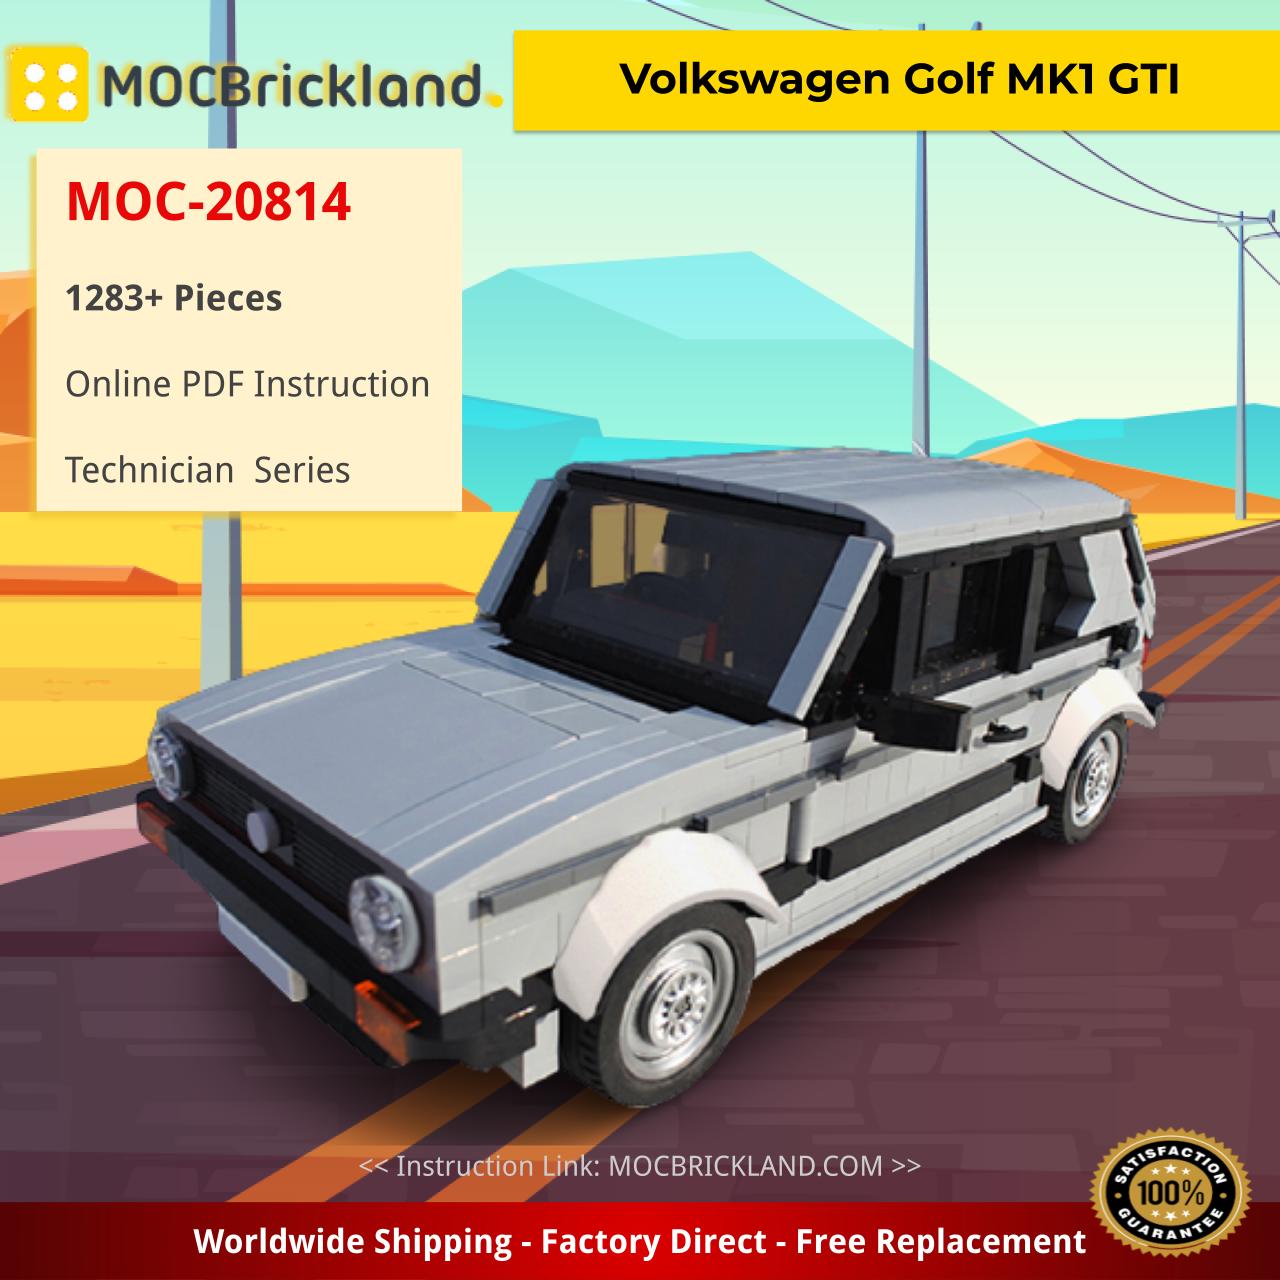 MOCBRICKLAND MOC-20814 Volkswagen Golf MK1 GTI